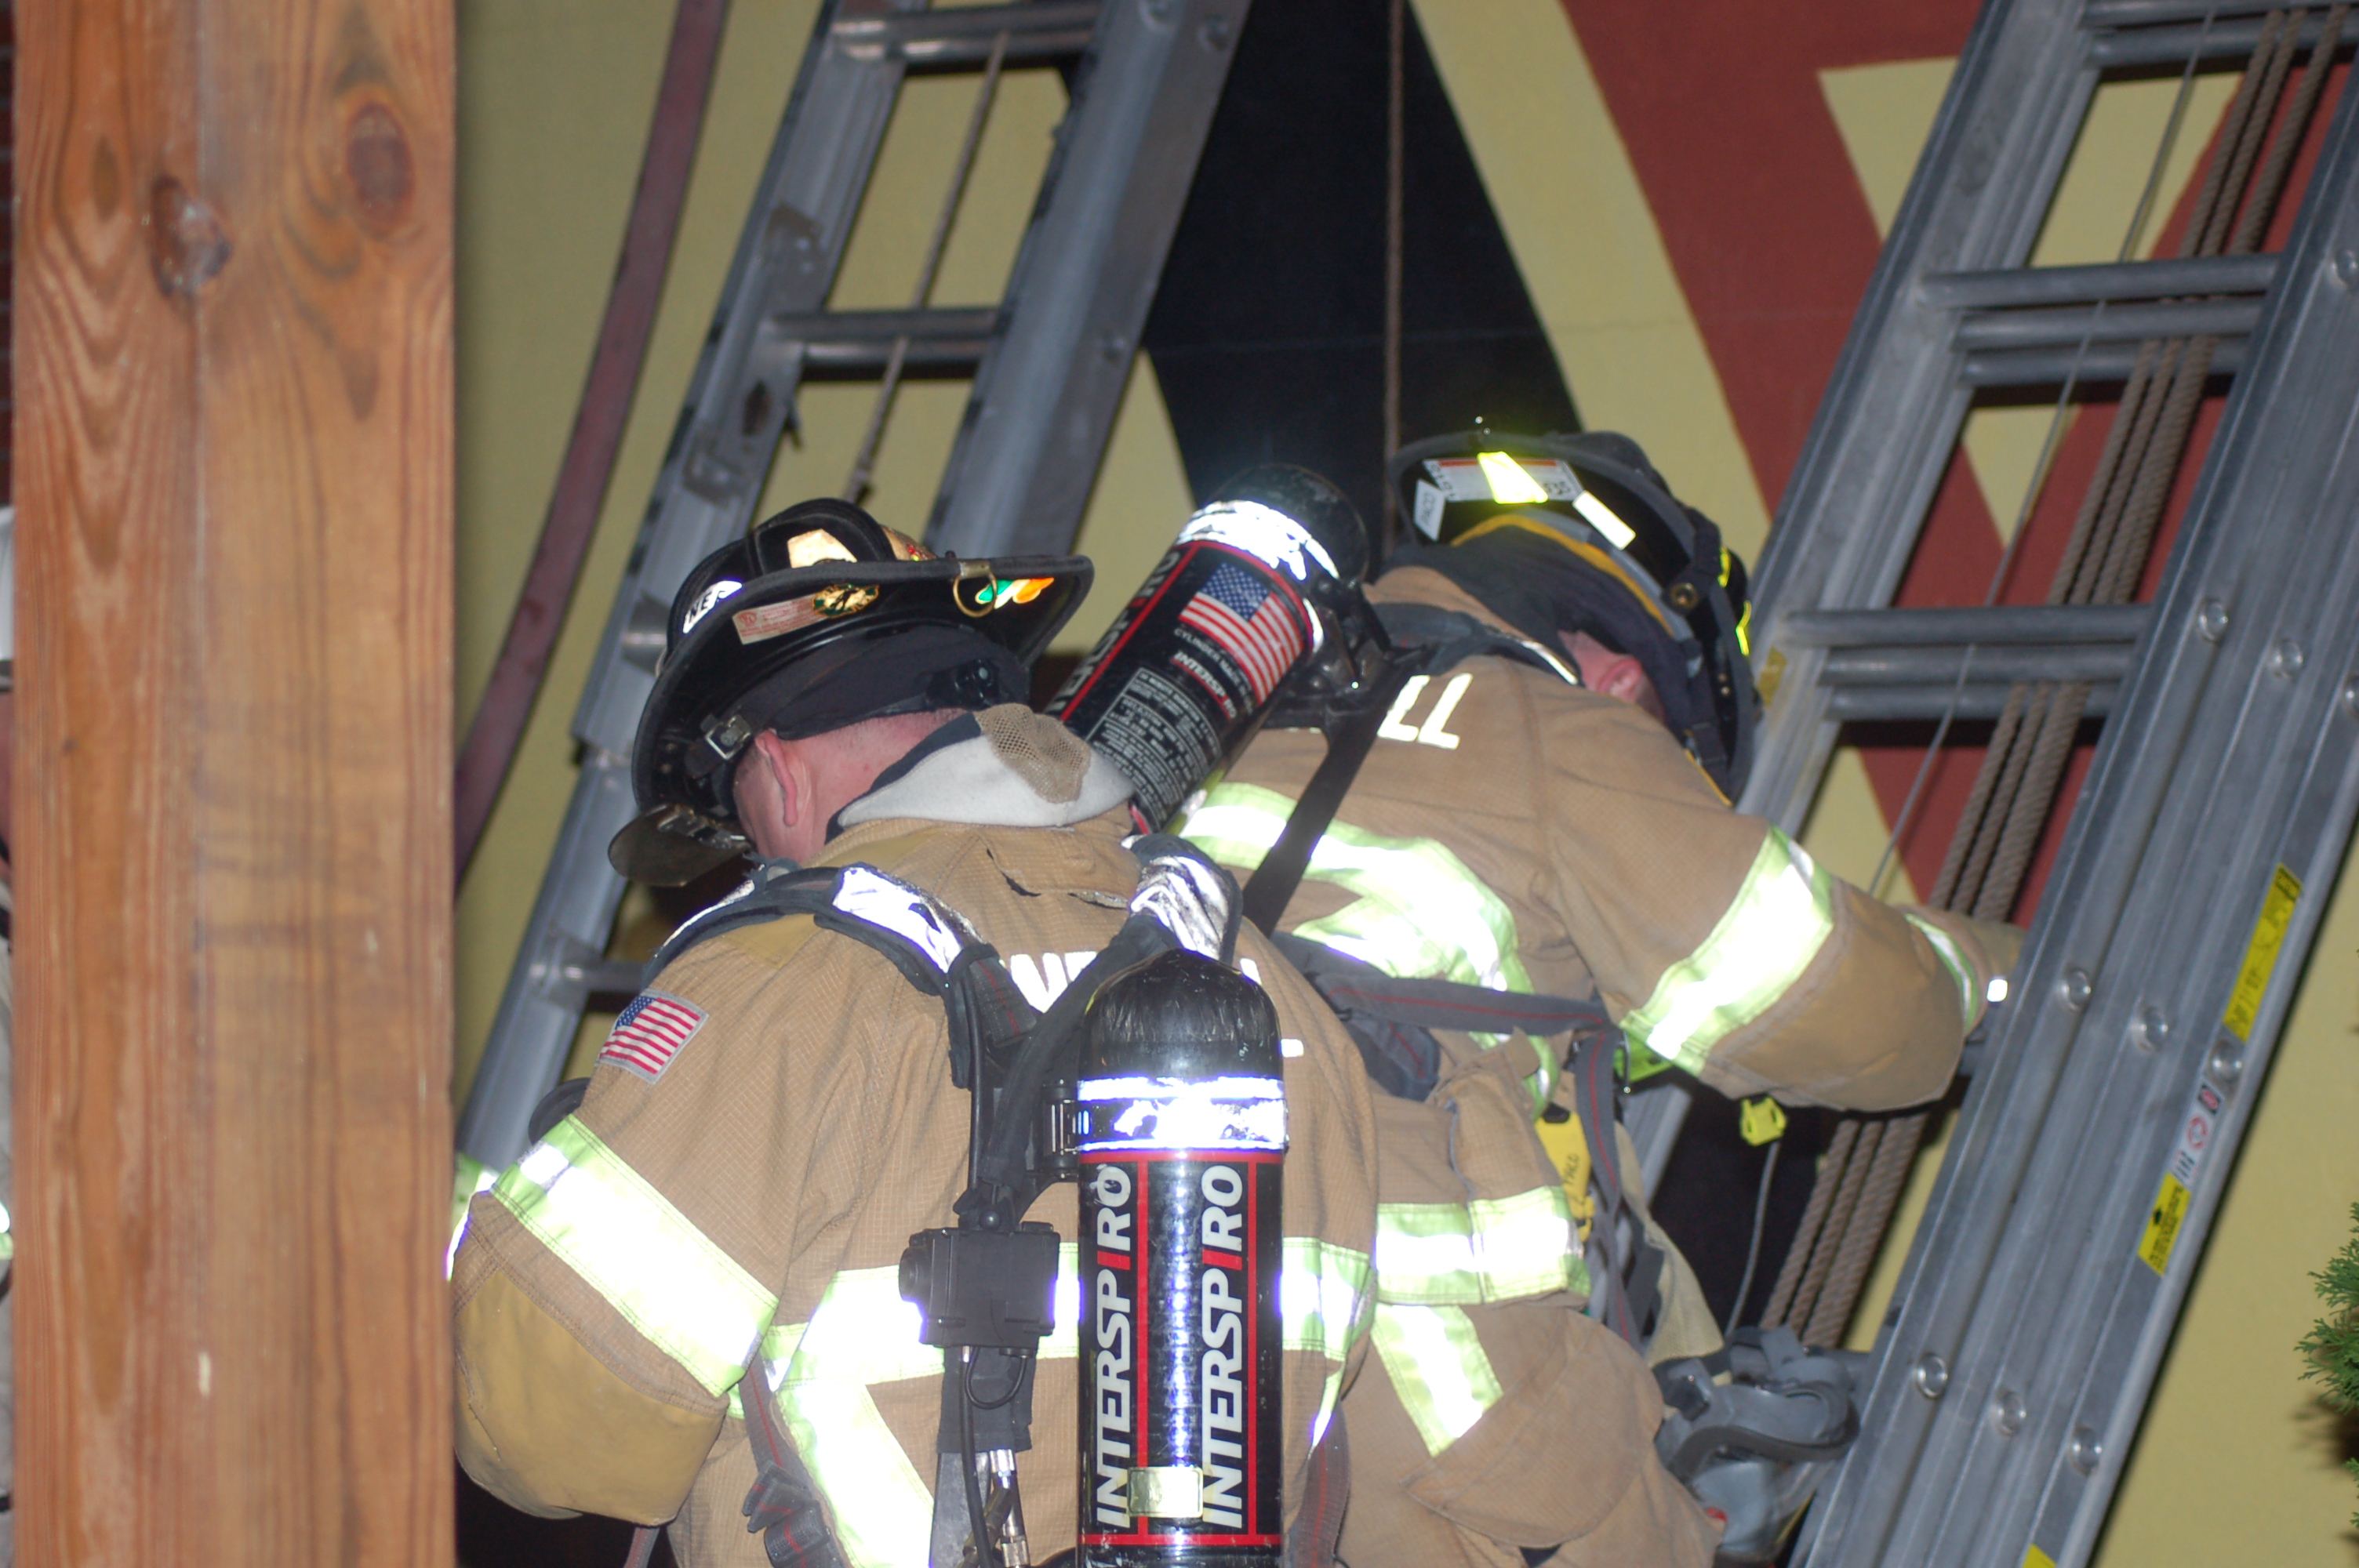 10-22-11  Response - Fire - Mutual Aid - JC YMCA